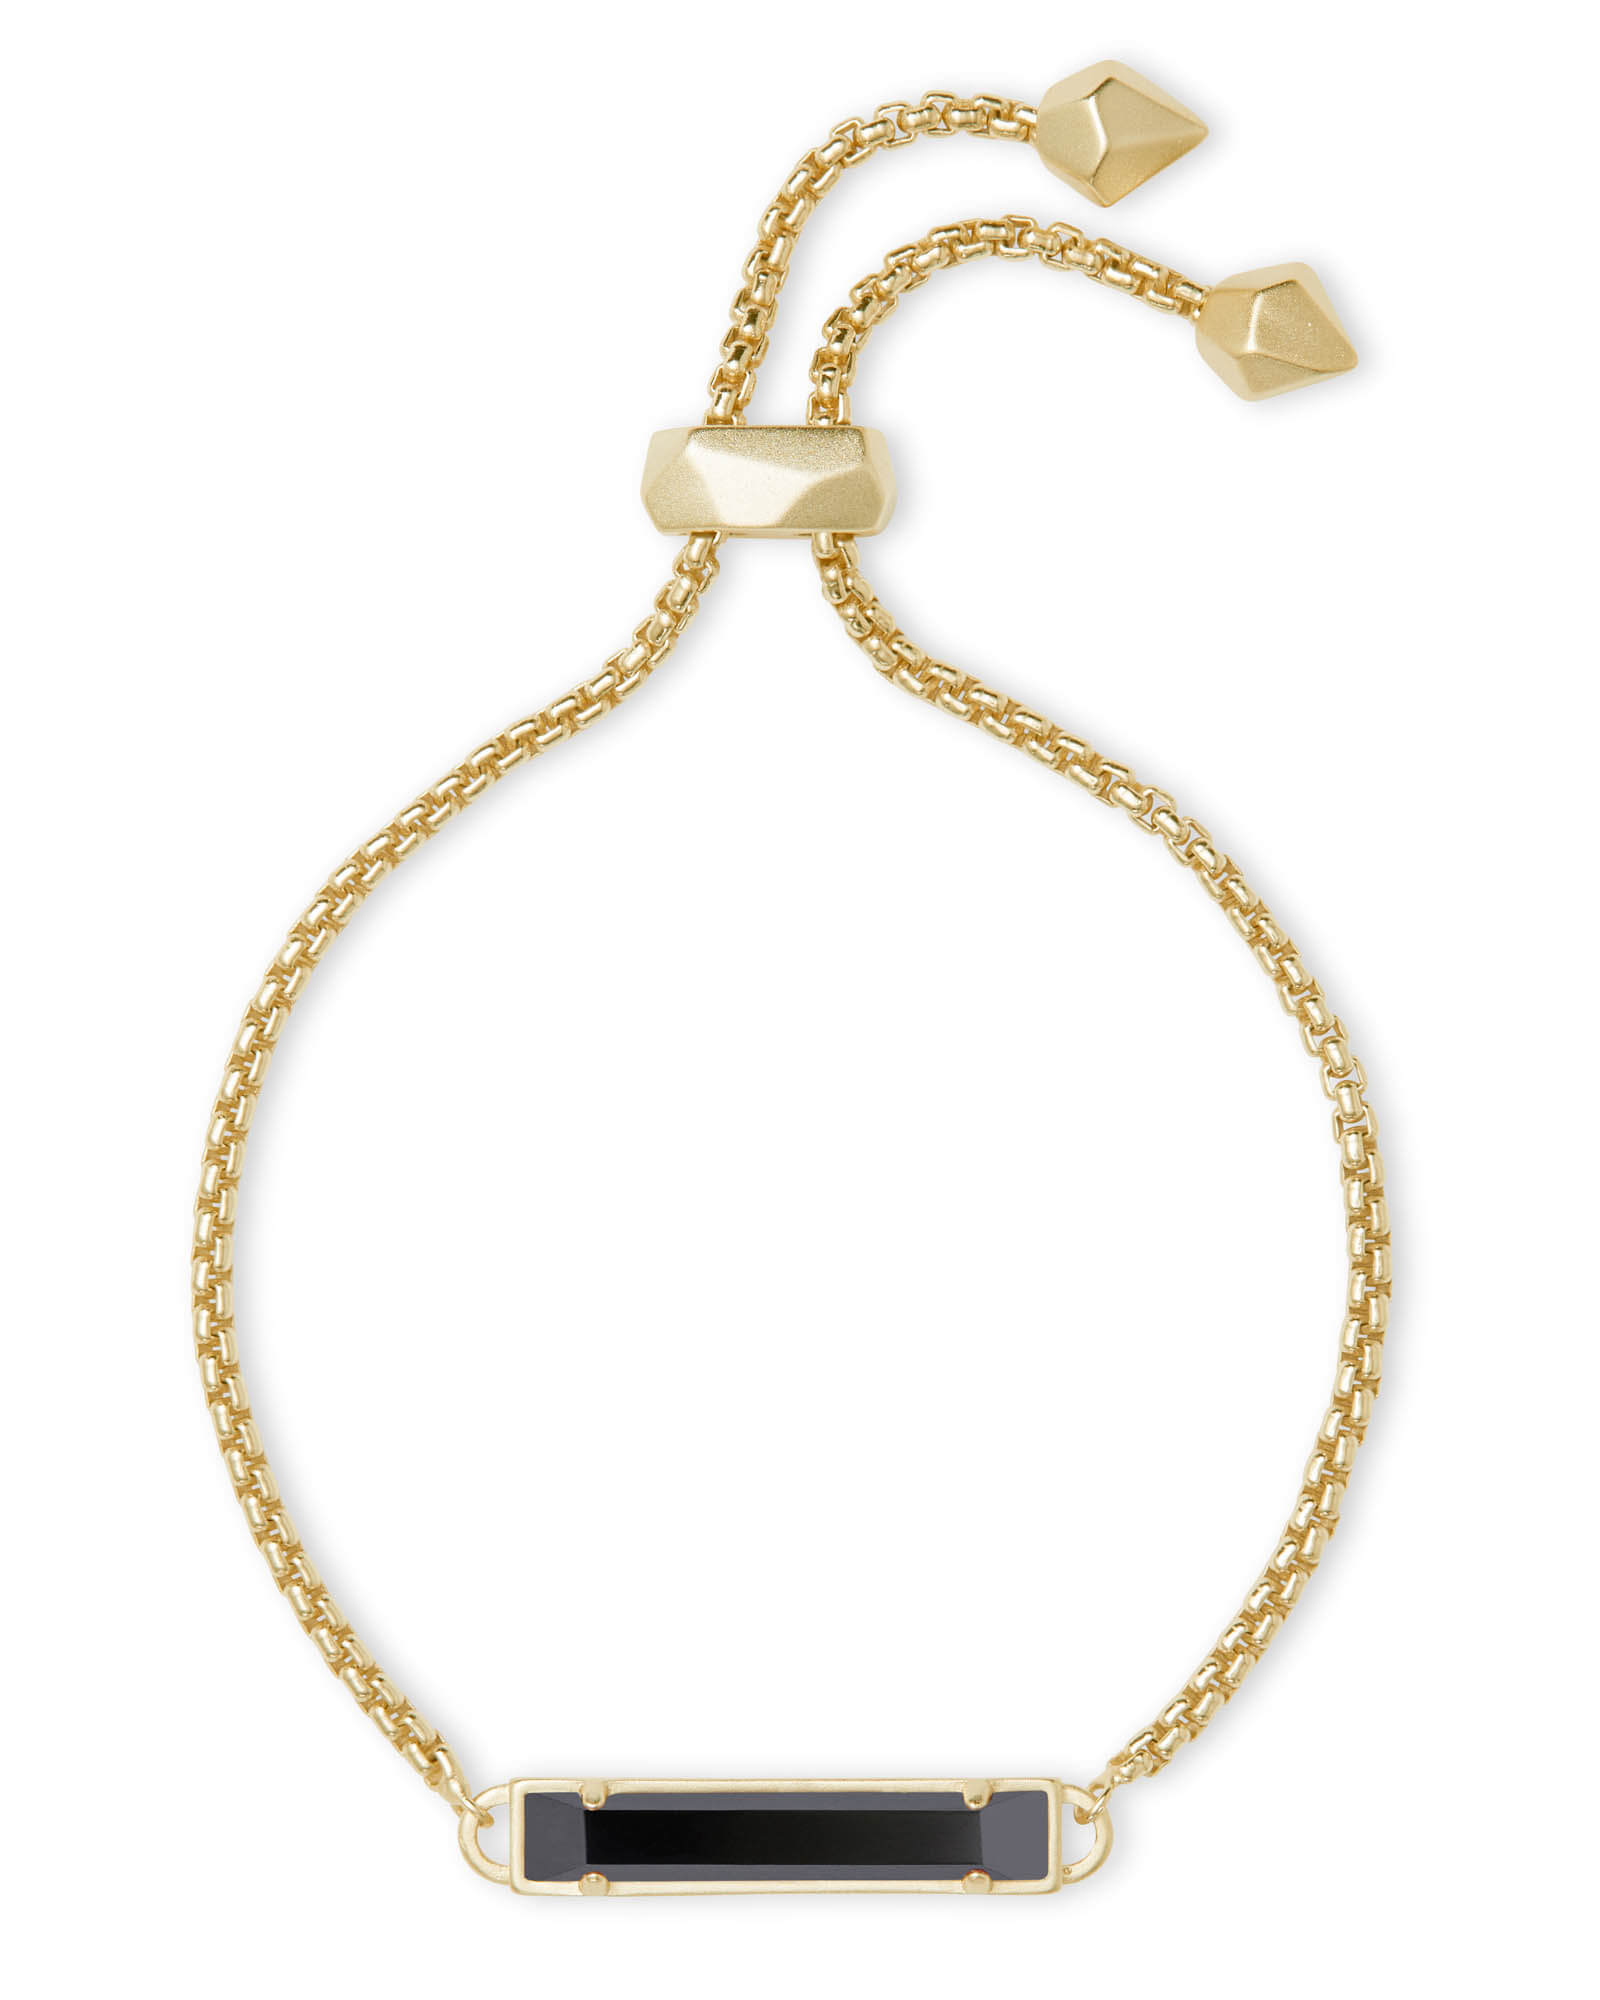 Stan Gold Adjustable Chain Bracelet in Black Opaque Glass